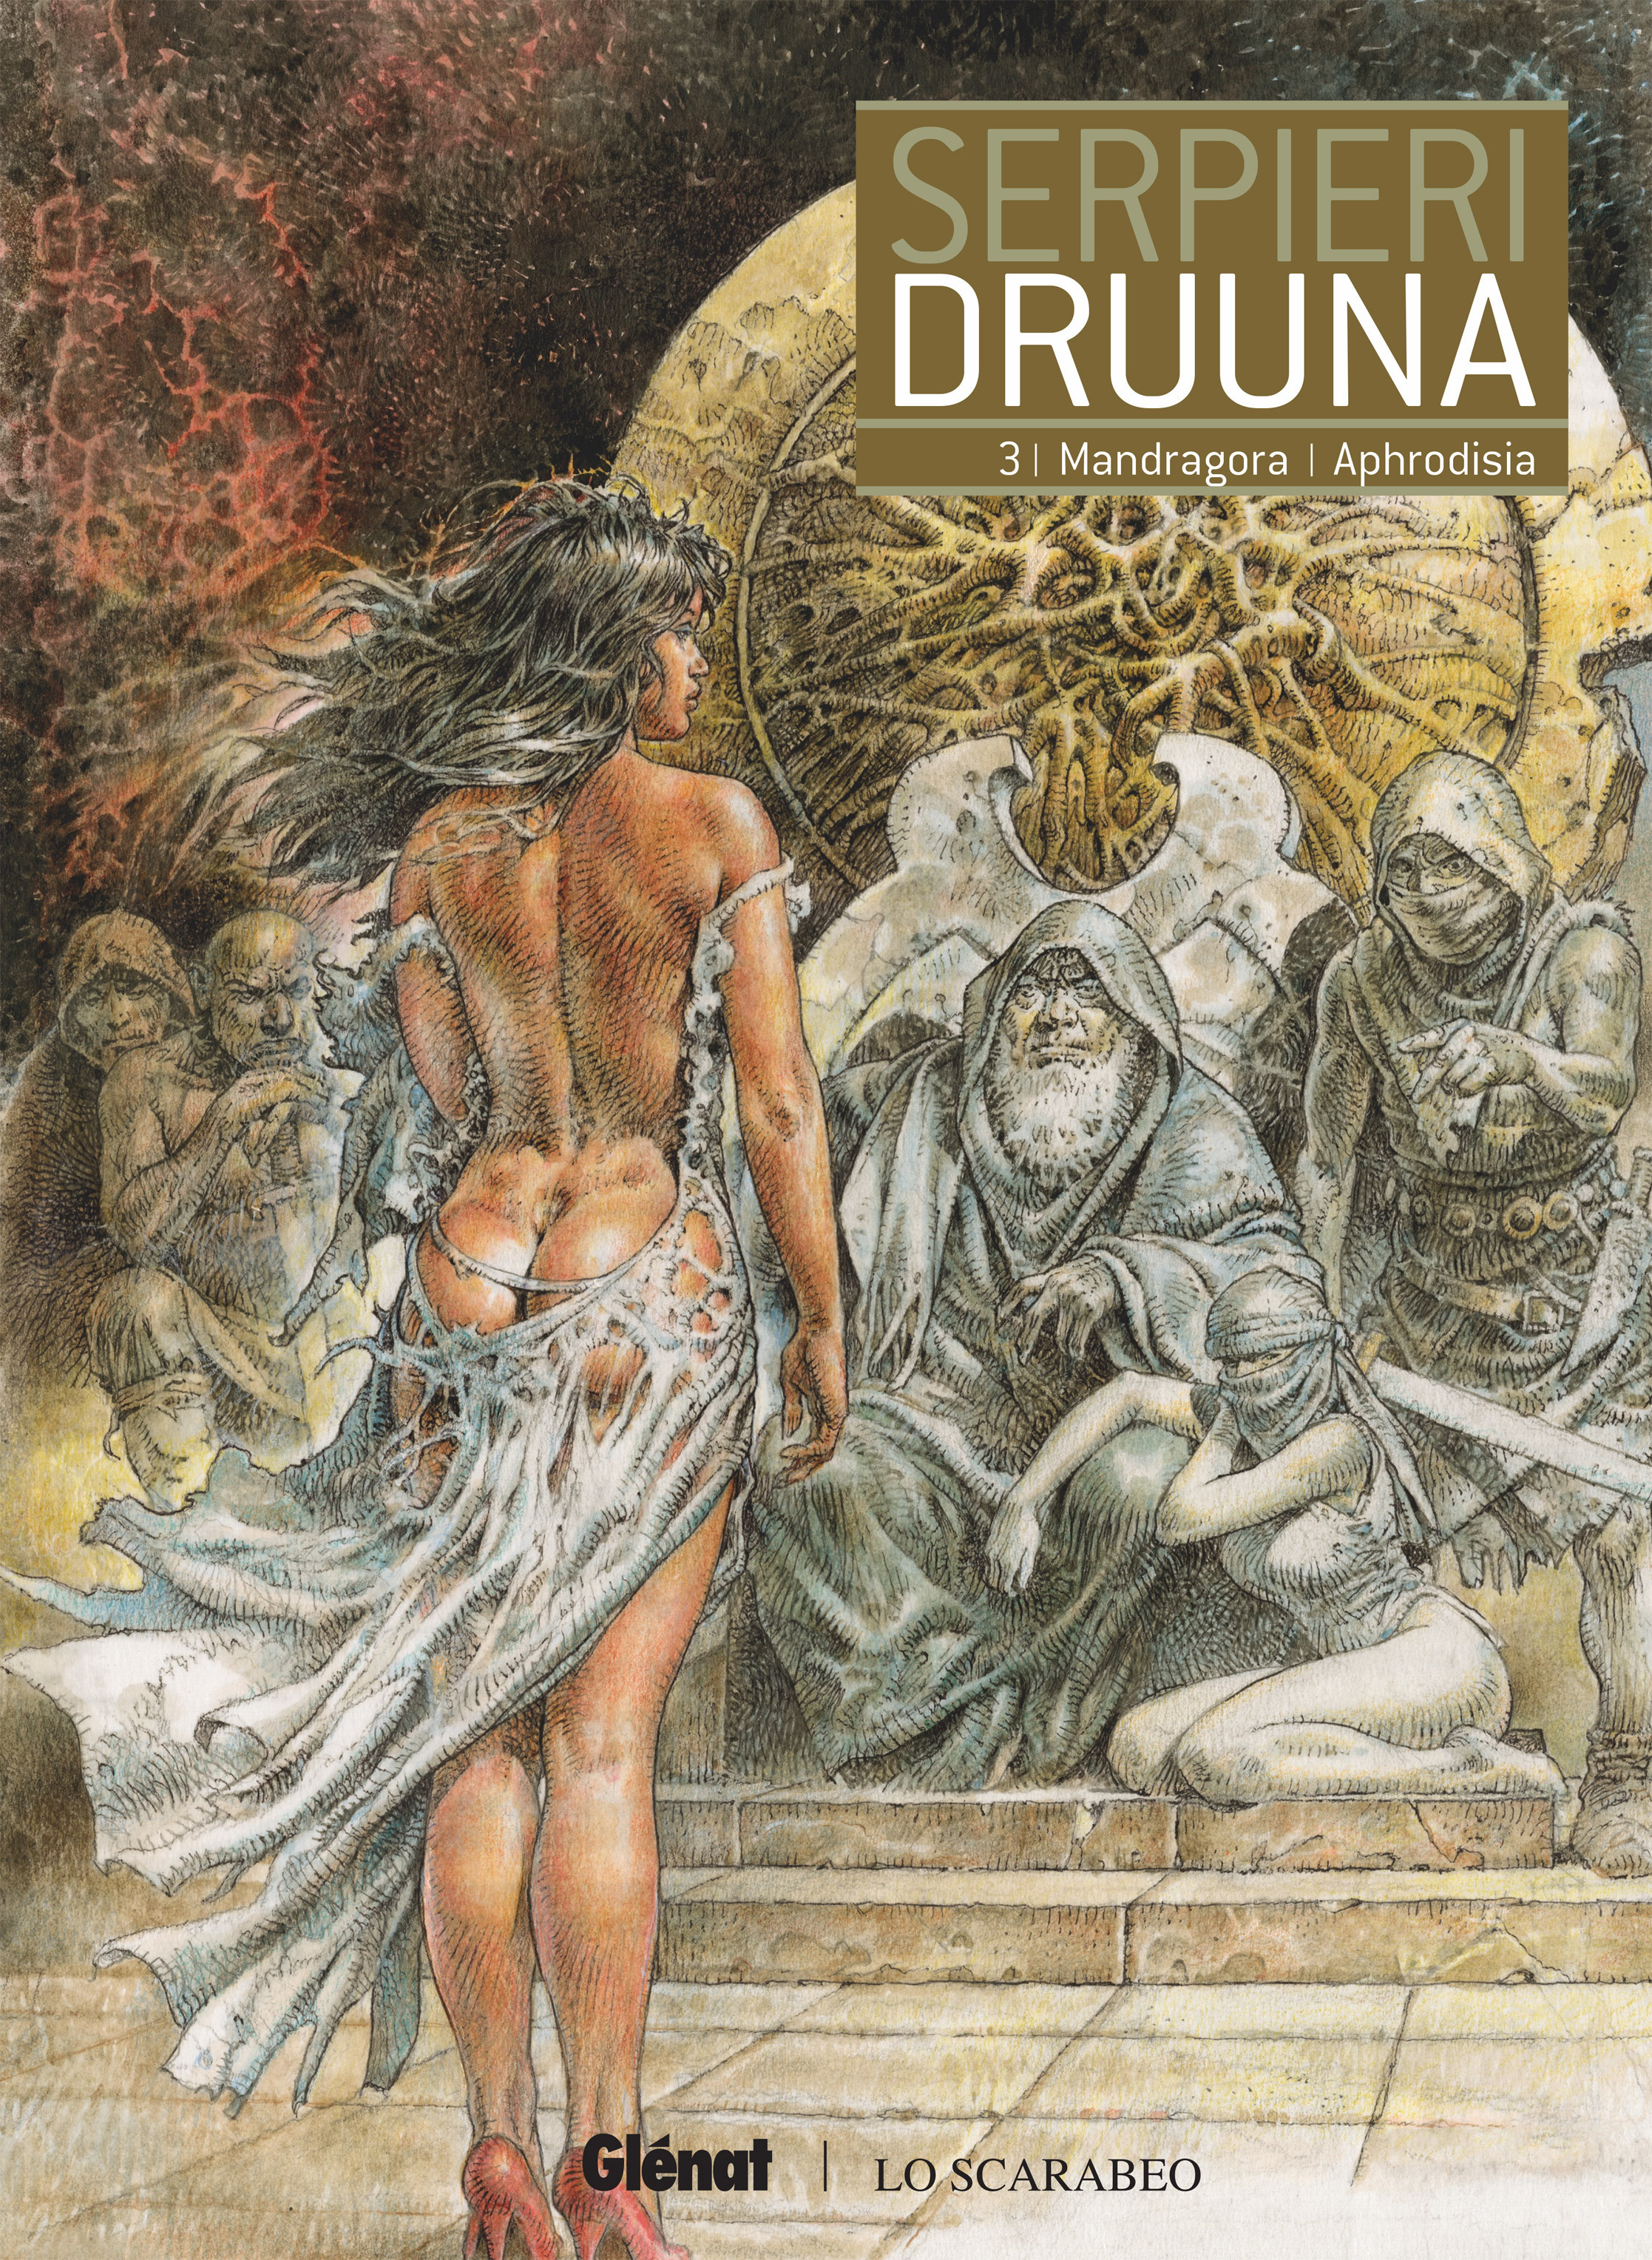 Paolo Eleuteri Serpieri -  Druuna T3. Mandragora - Aphrodisia (2016) (French Edition)